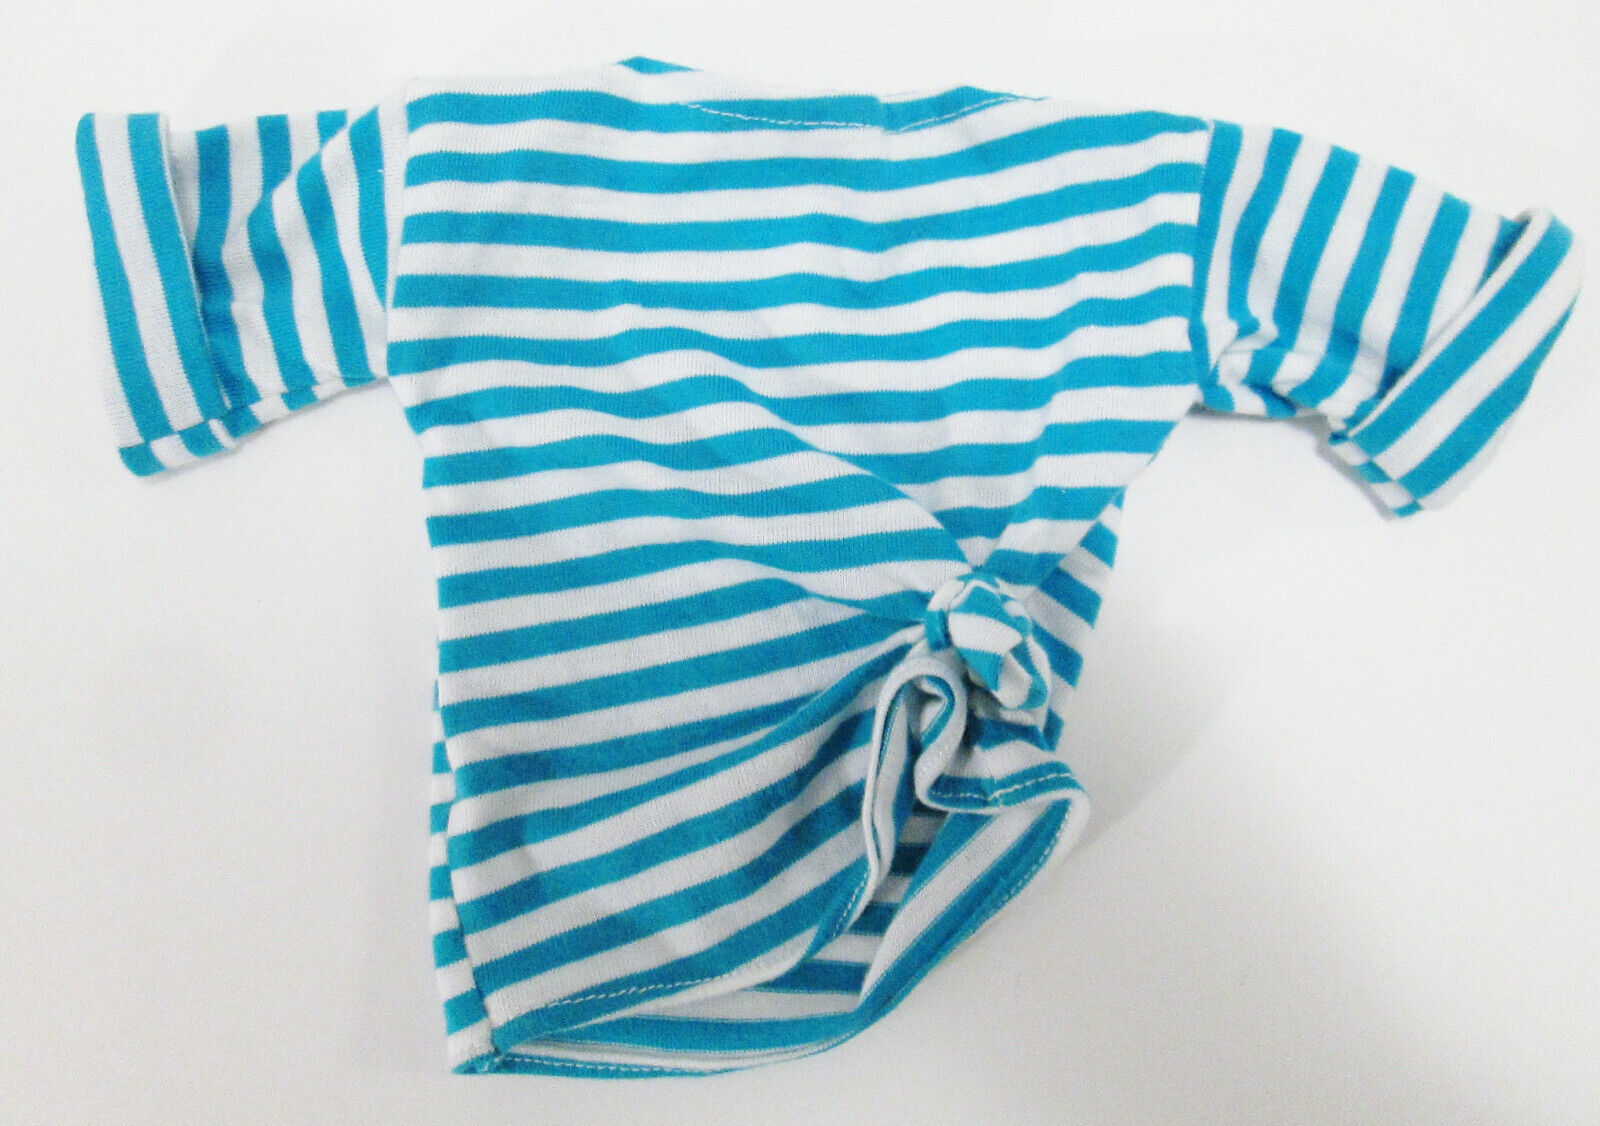 Vtg Mattel HOT LOOKS Doll Clothing Teal & White Striped Shirt FROM Chelsea 3704 - $8.00